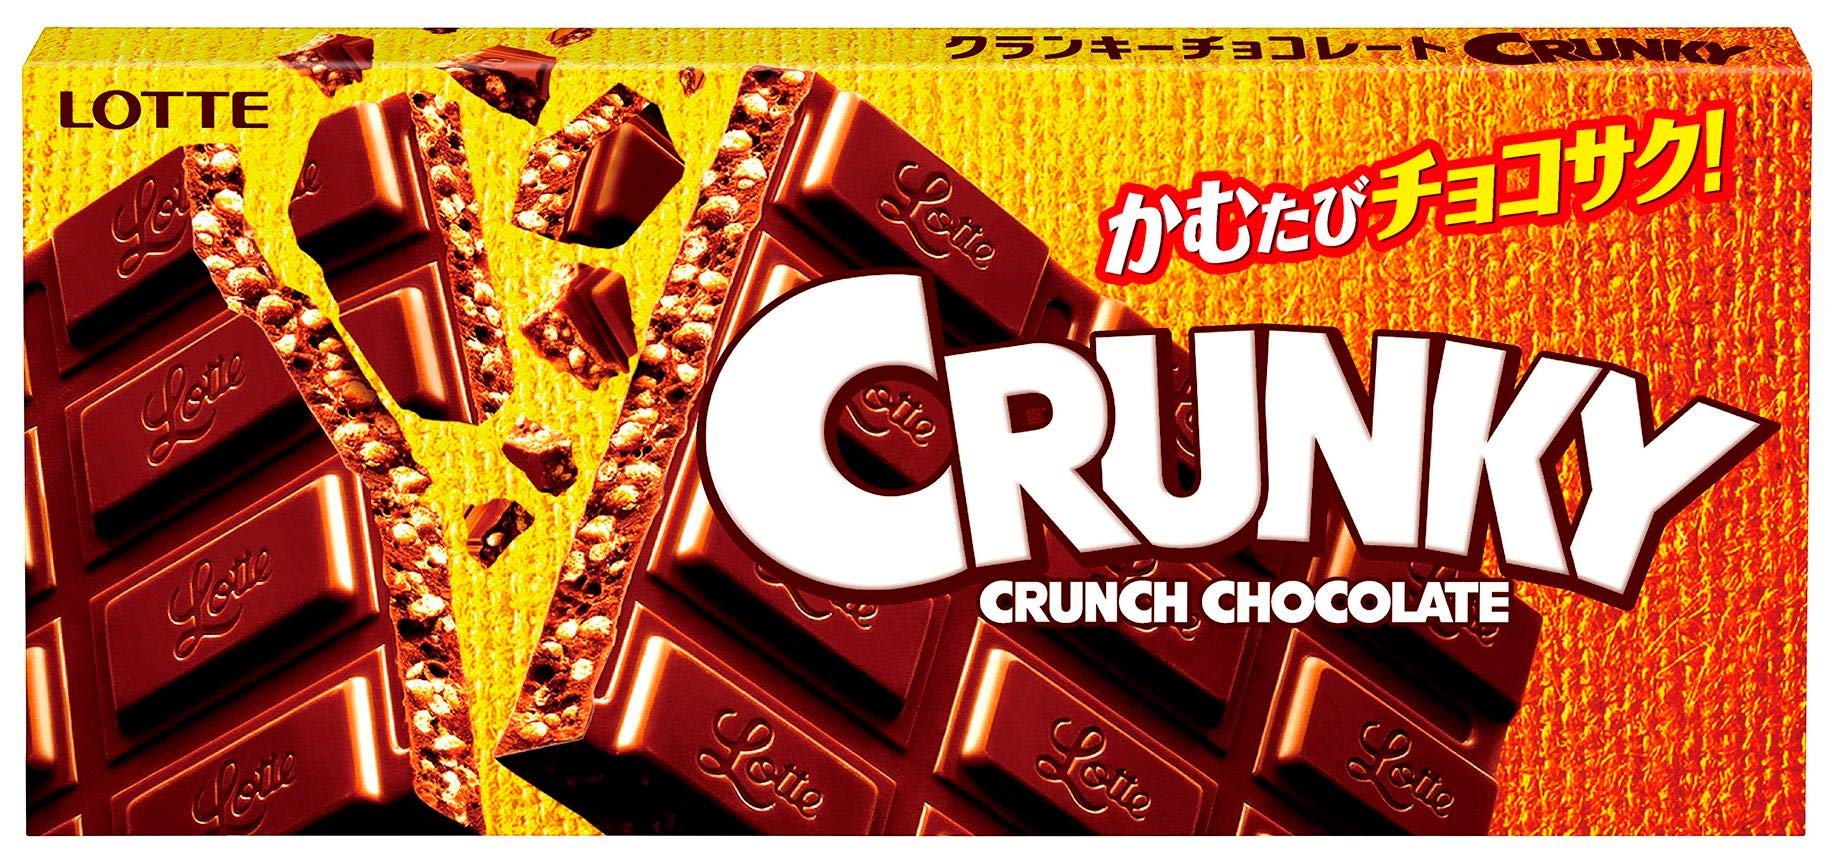 LOTTE Crunky Crunch Schokoriegel Dagashi Snack Japan